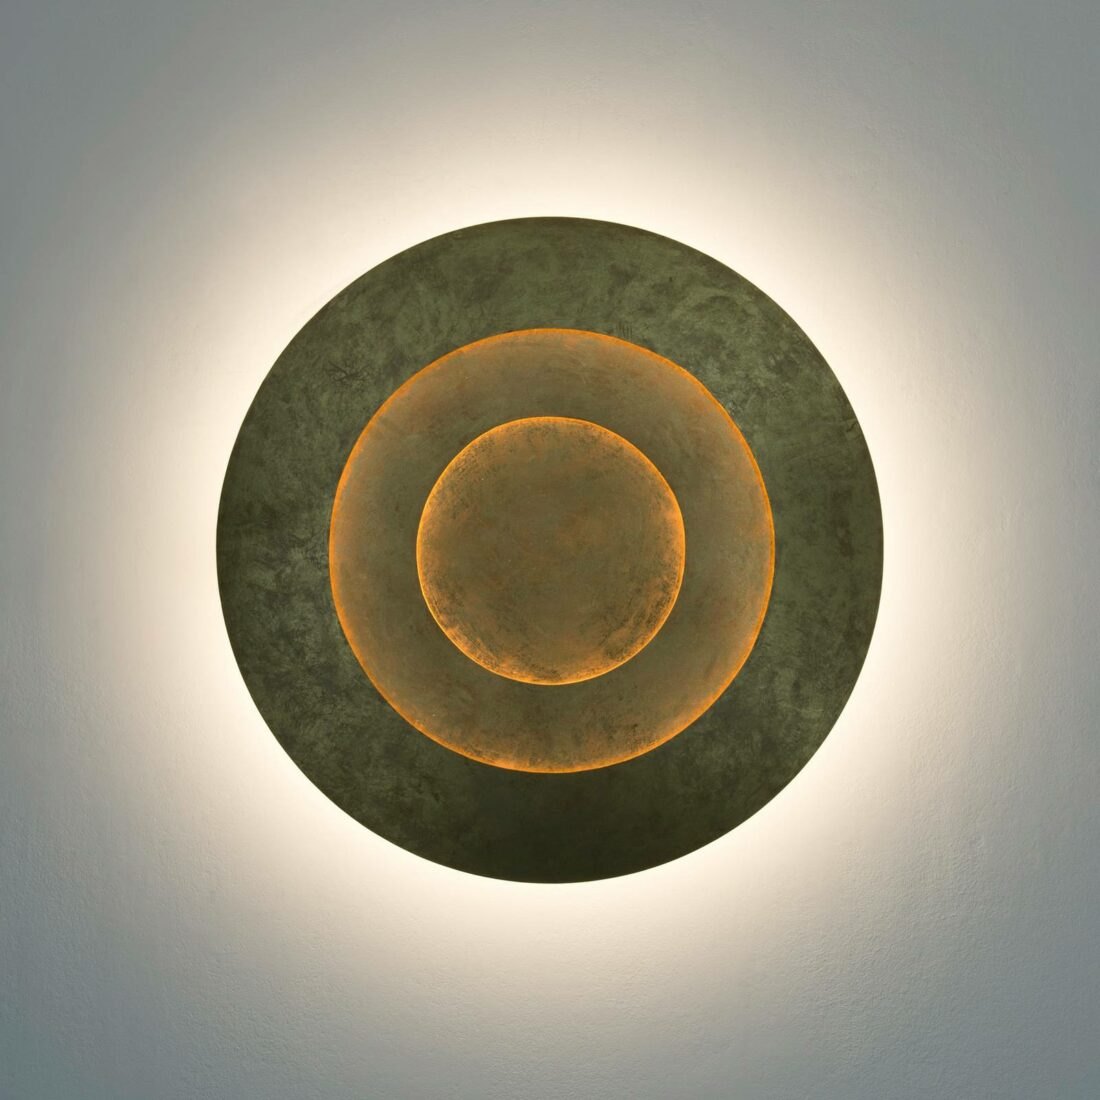 Holländer LED nástěnné světlo Masaccio Rotondo